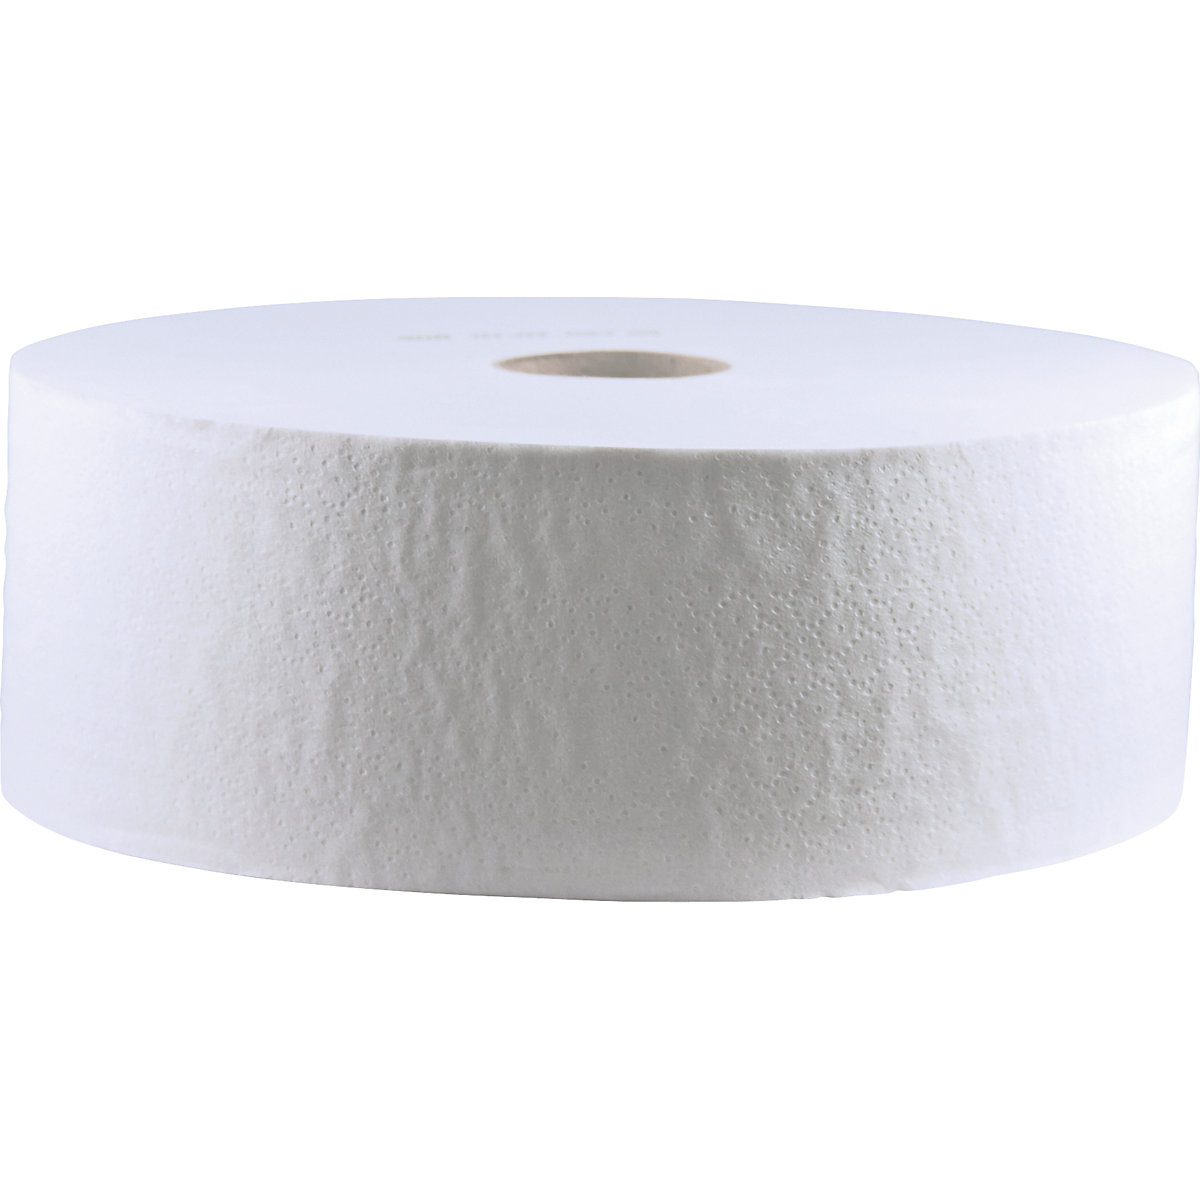 Velike role toaletnega papirja Tissue - CWS